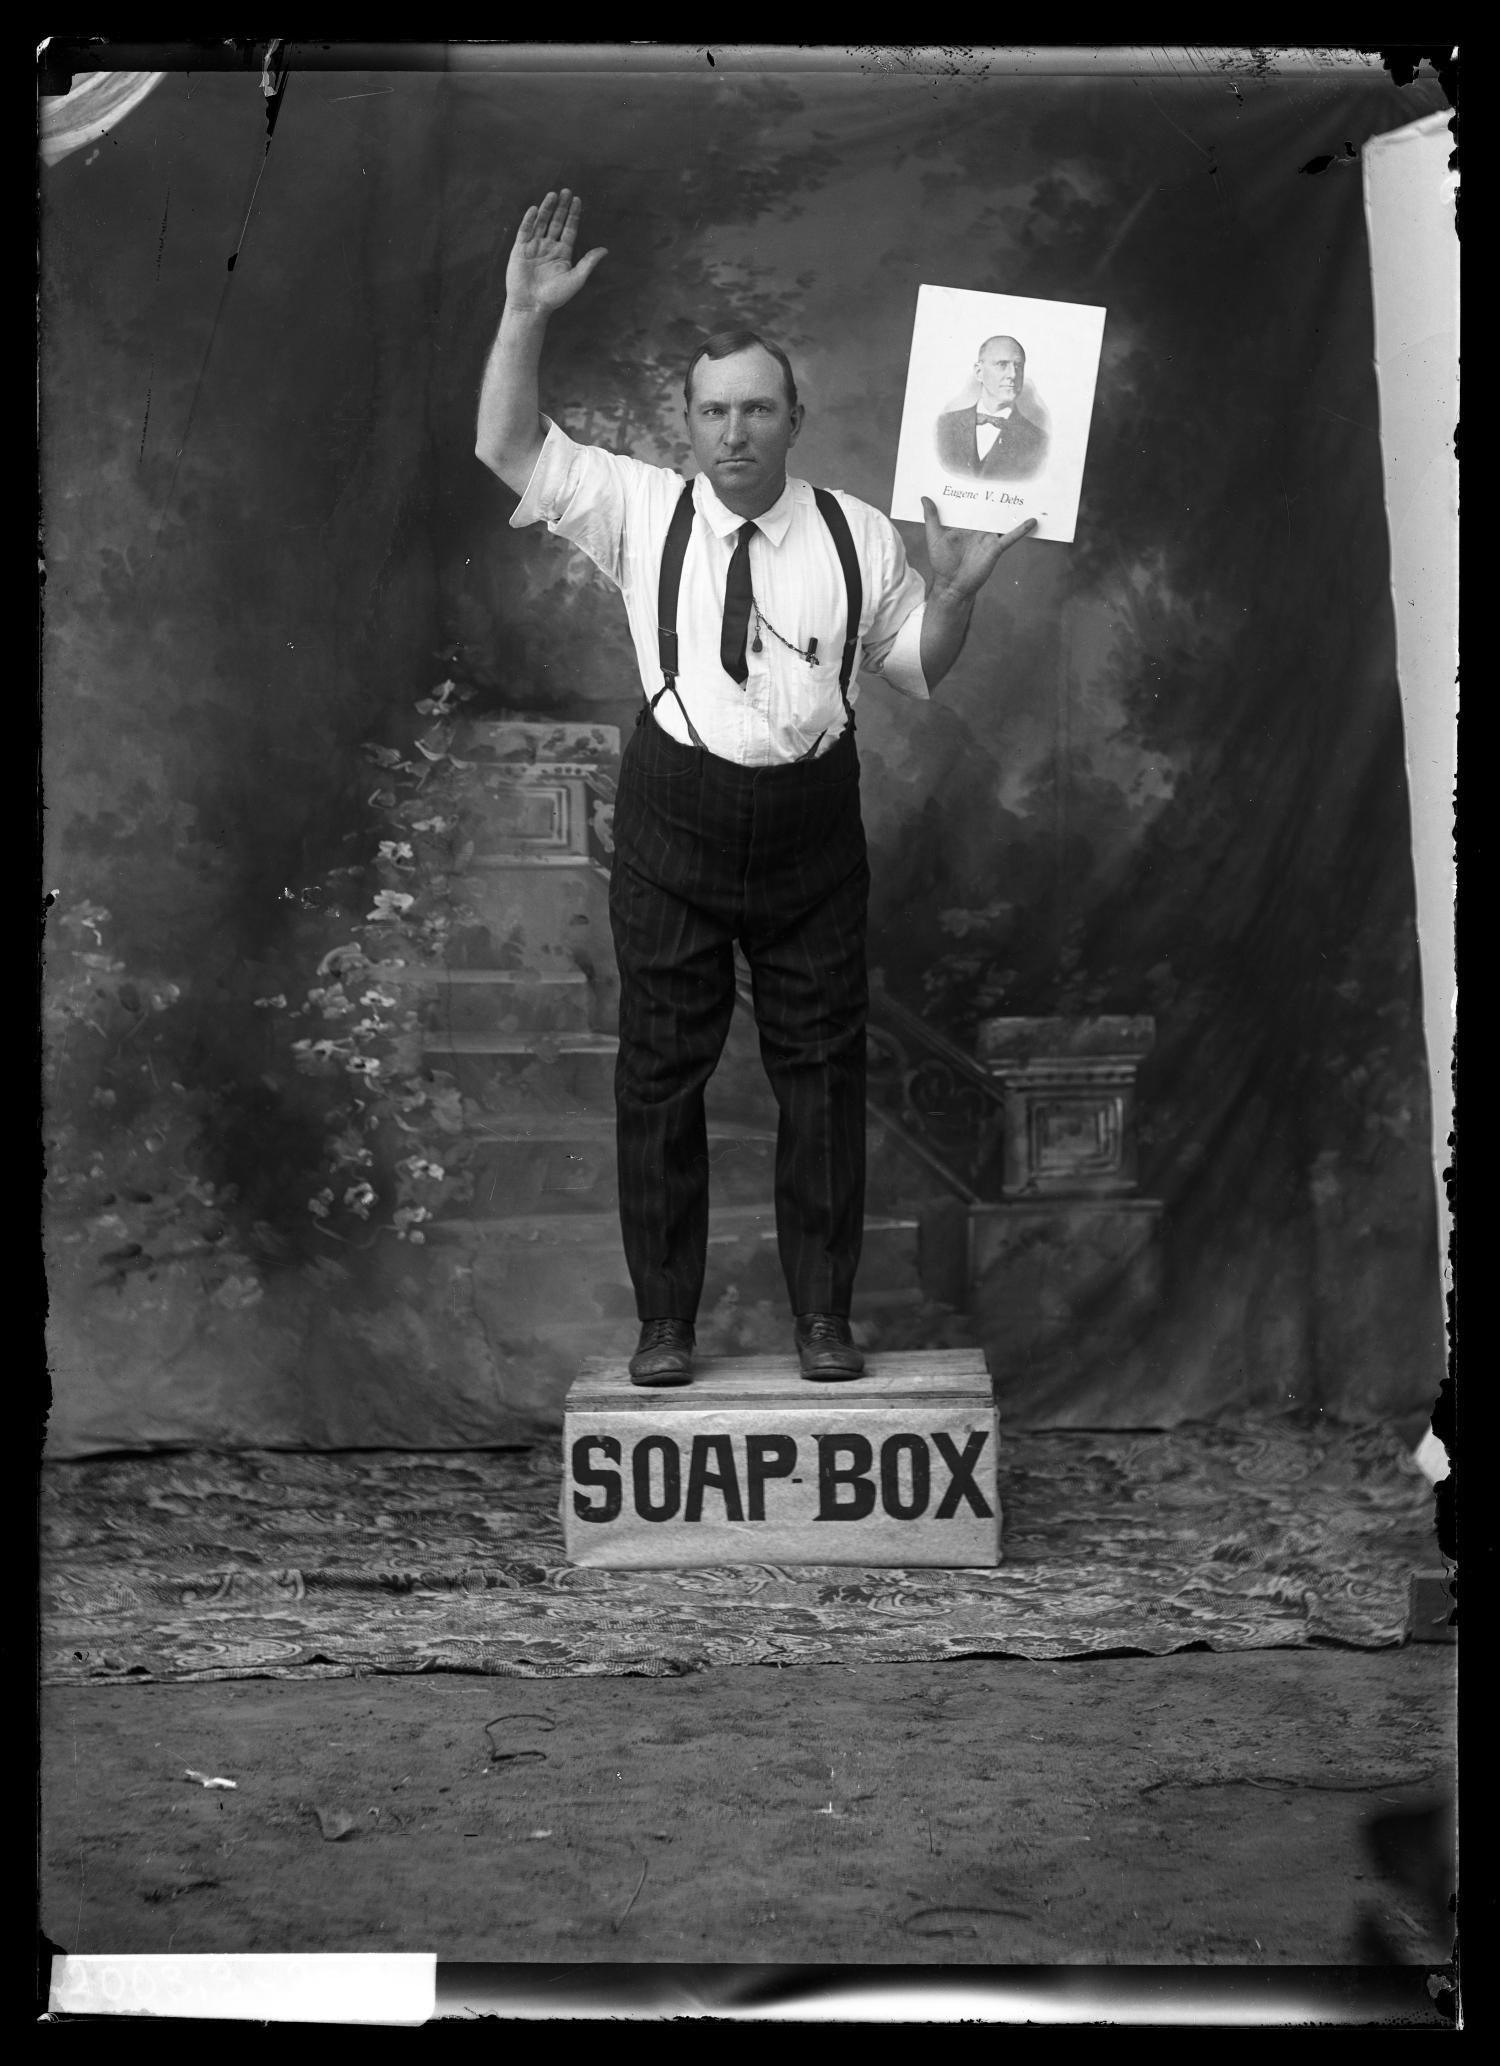 Man on Soap Box] - The Portal to Texas History